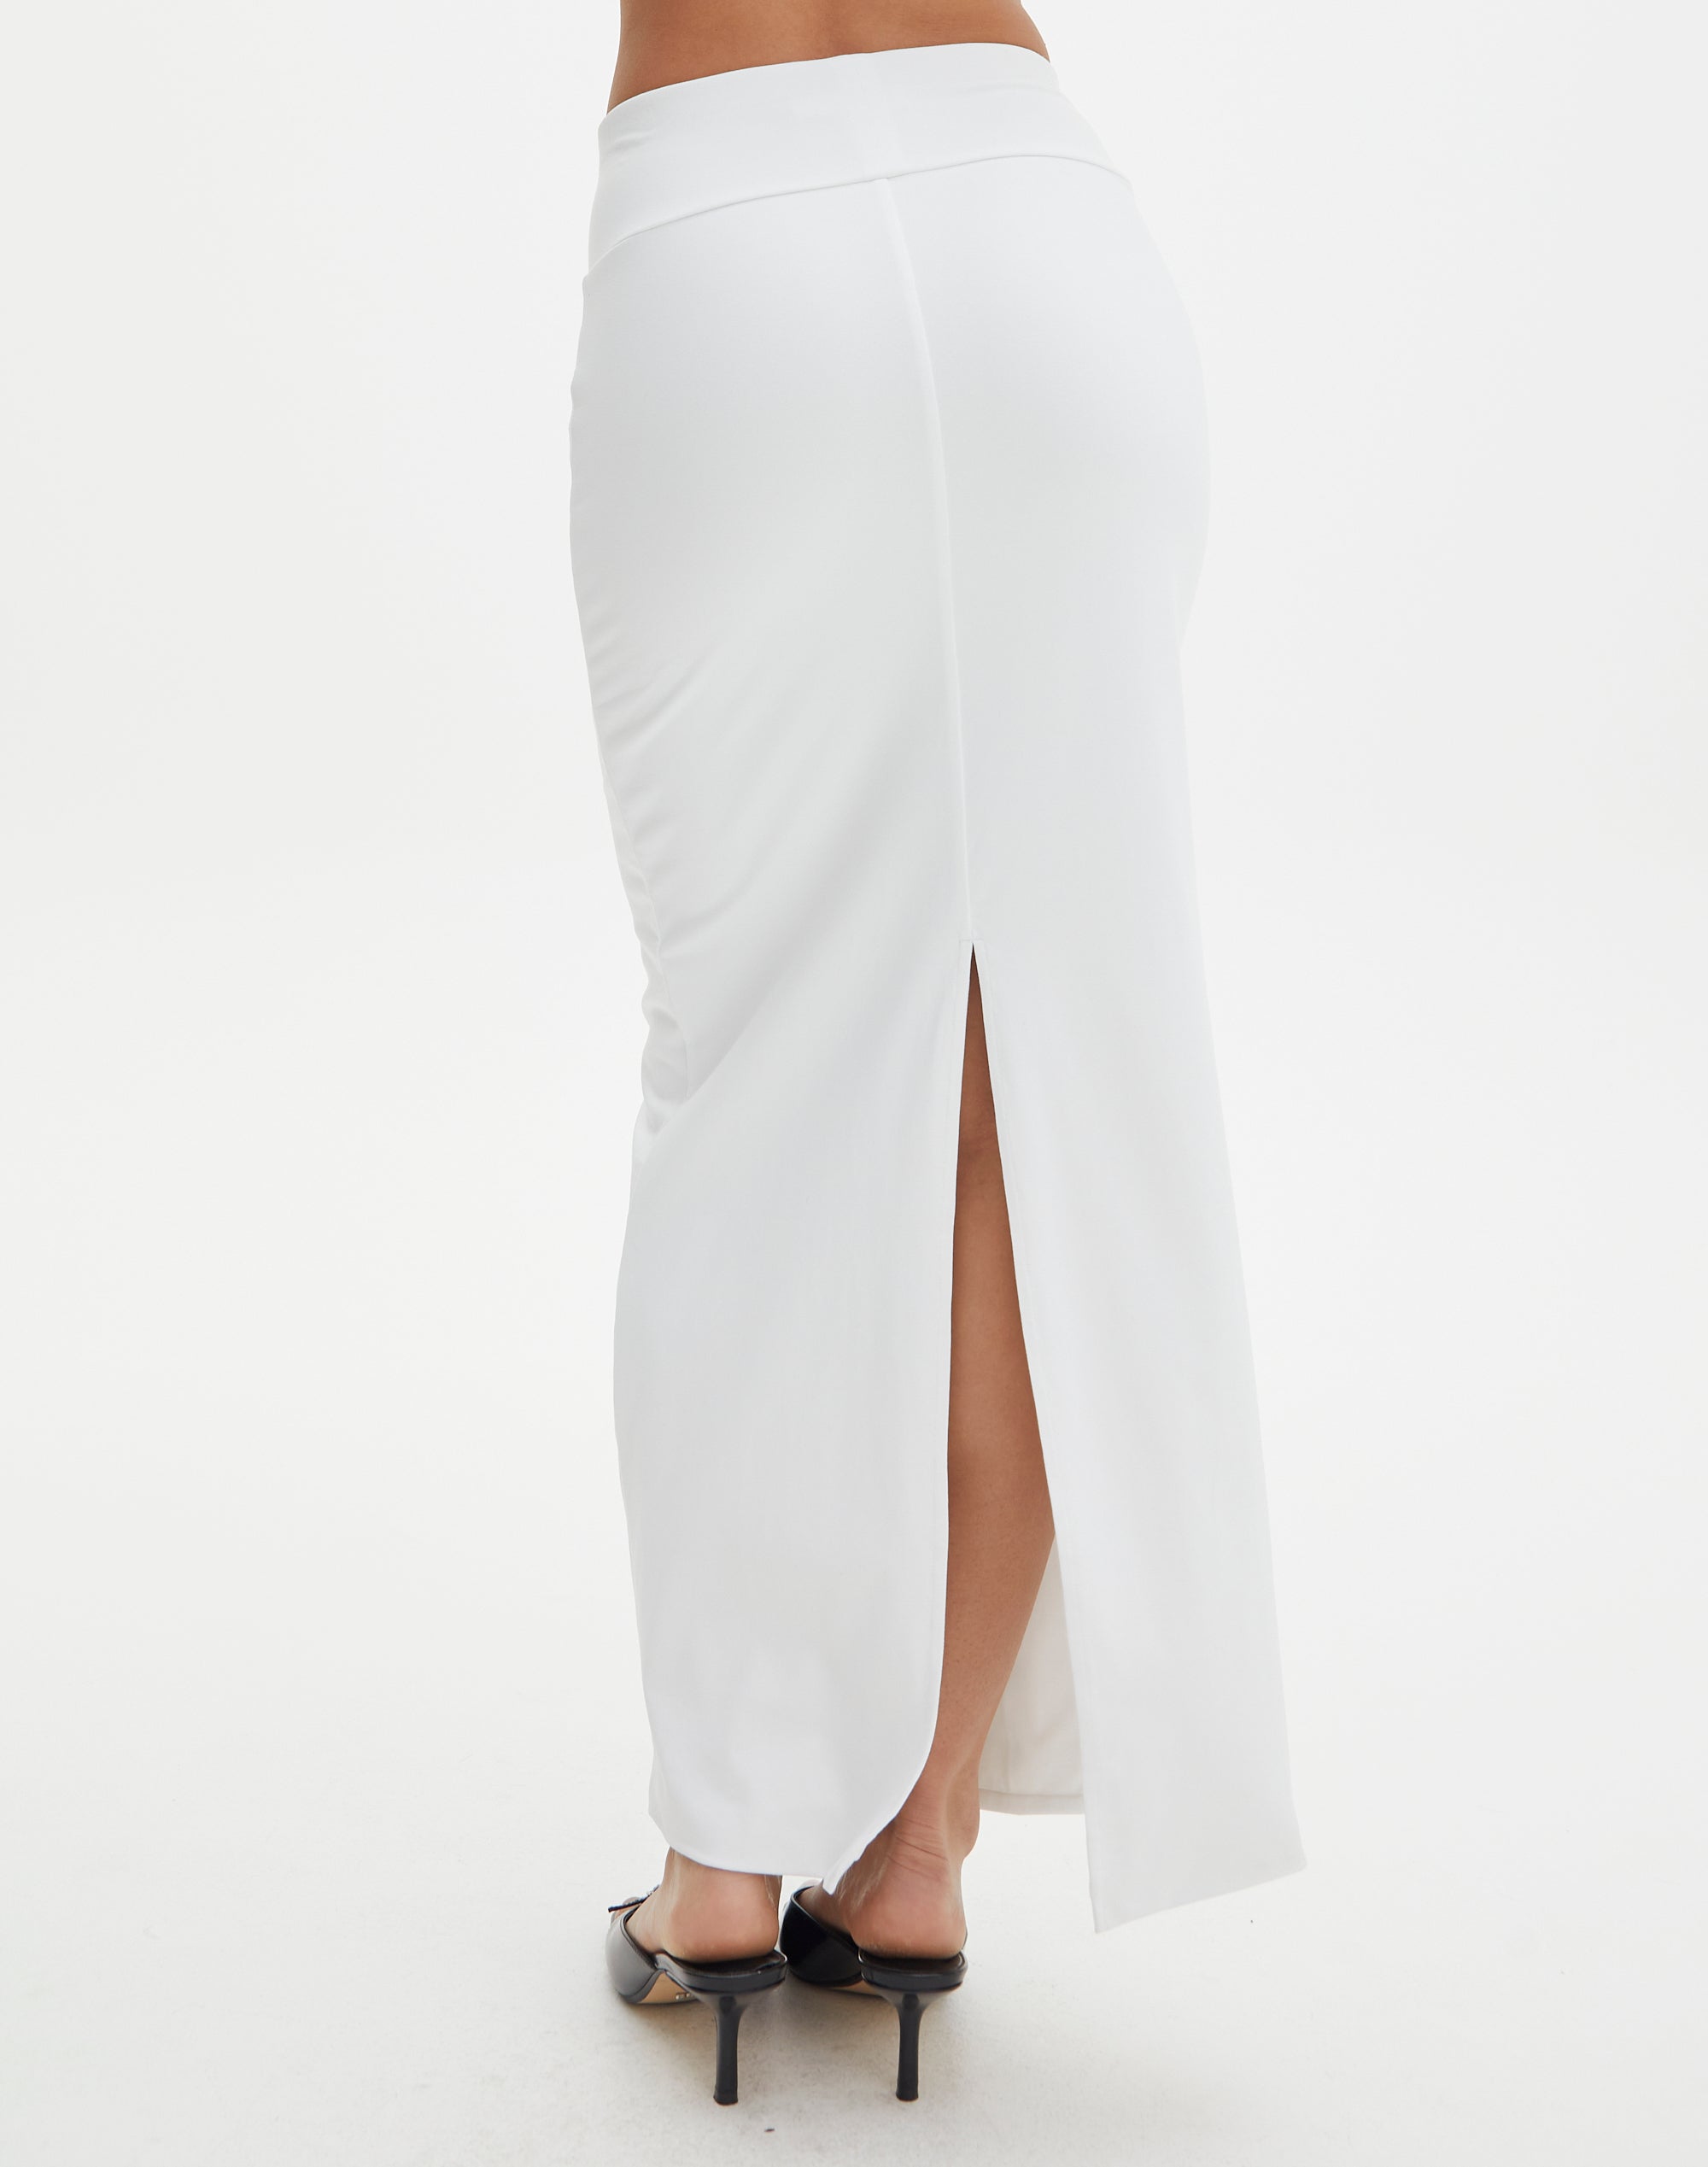 Supersoft Split Maxi Skirt in White